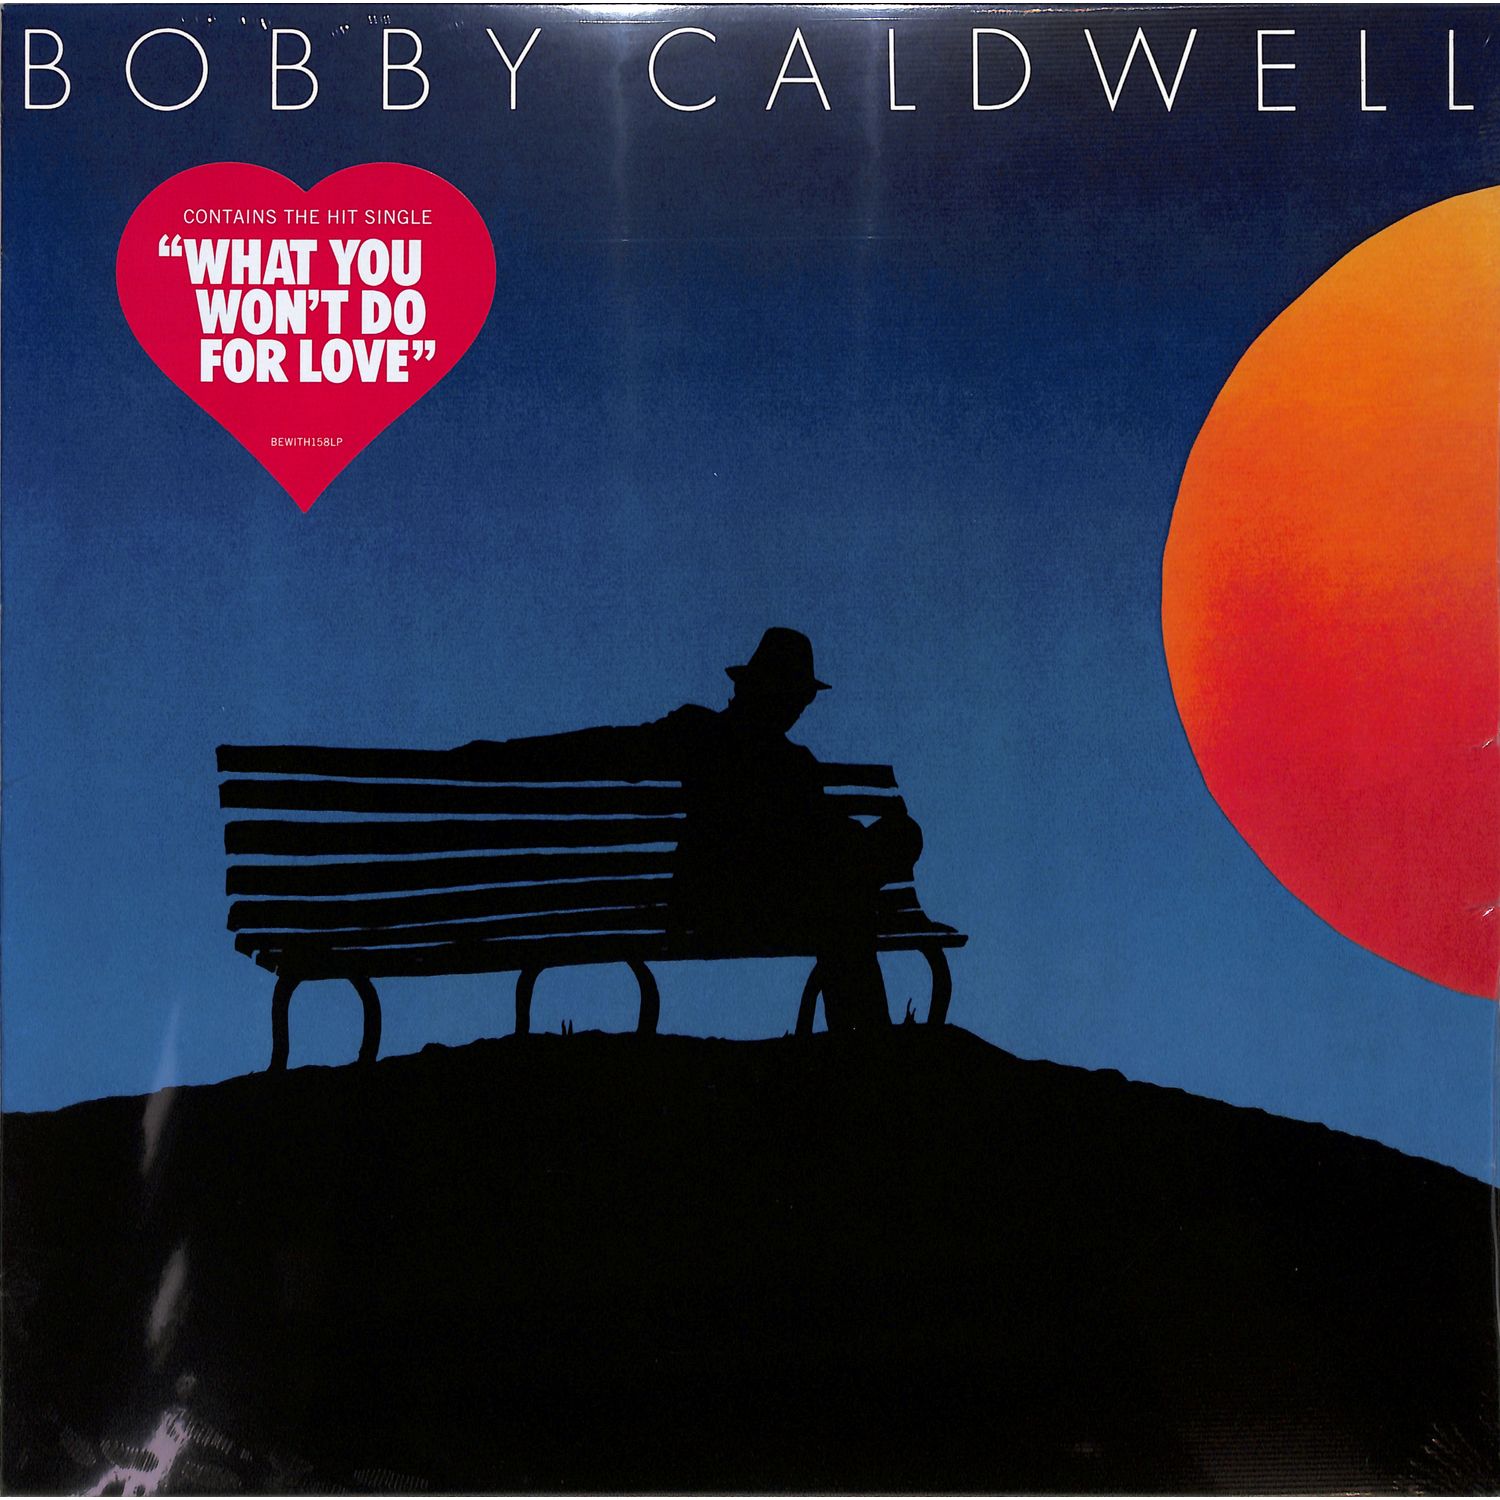 Bobby Caldwell - BOBBY CALDWELL 